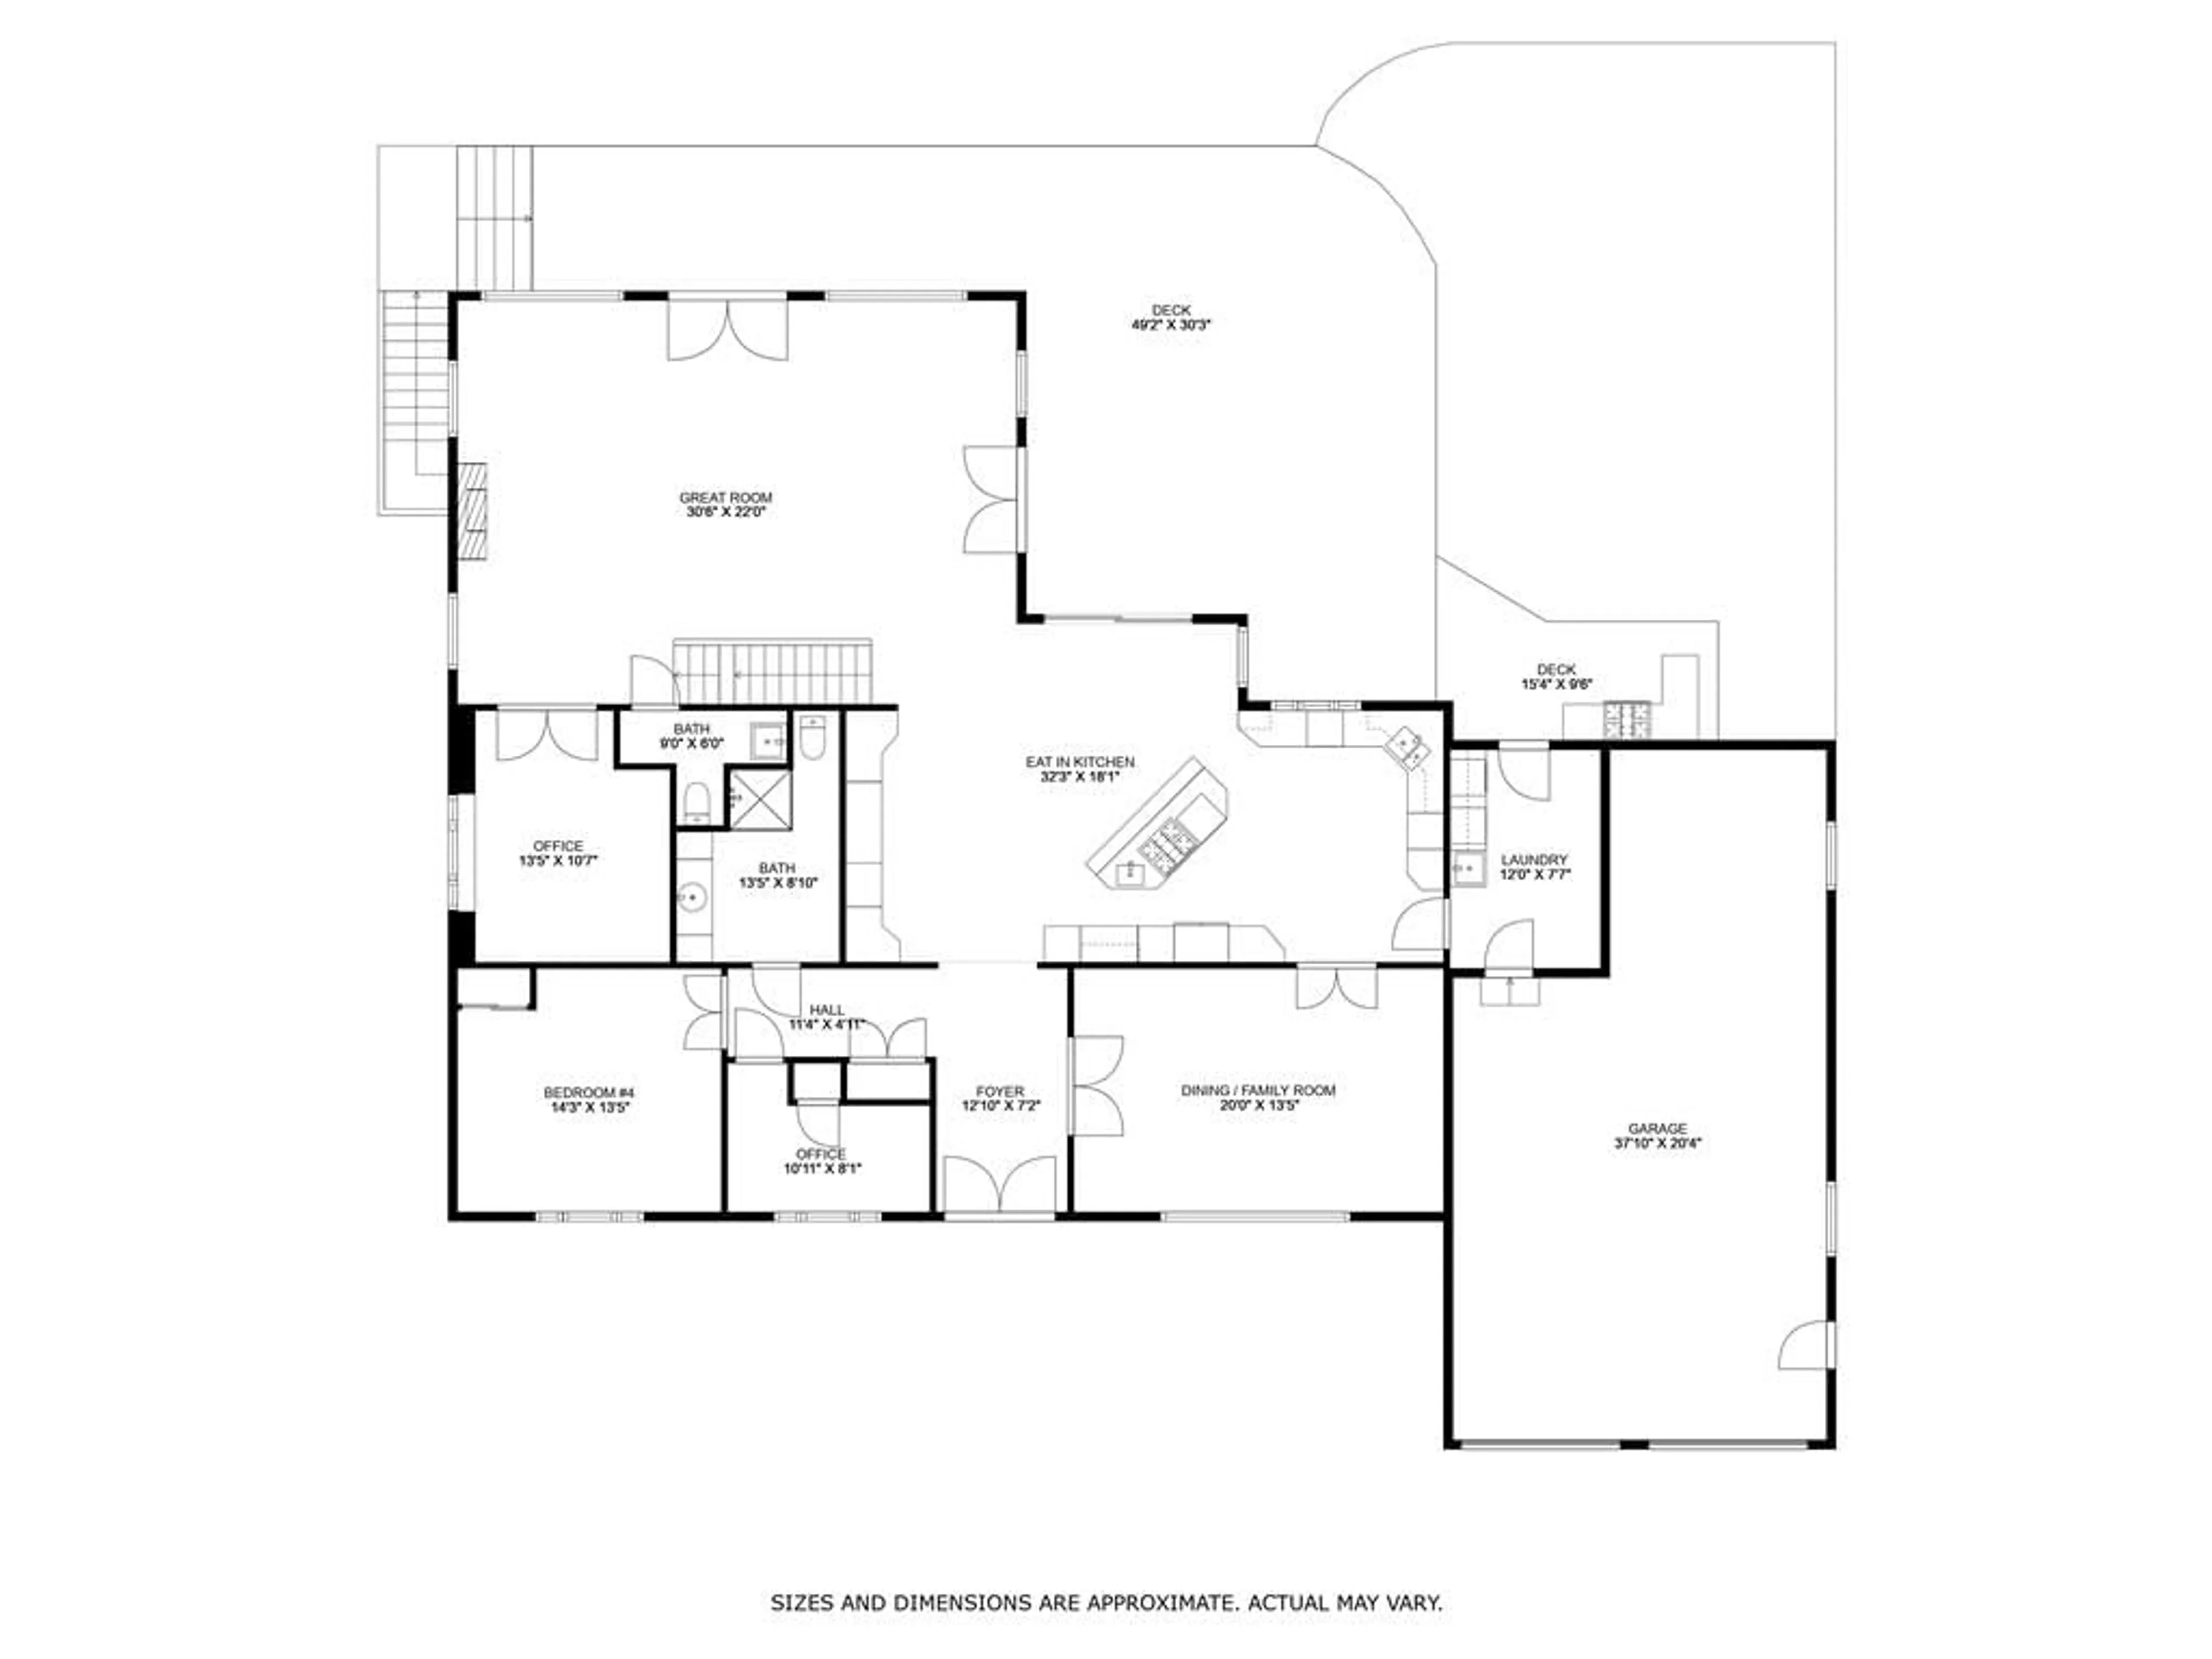 Floor plan for 57 KENNEDY Rd, Caledon Ontario L7C 2M7